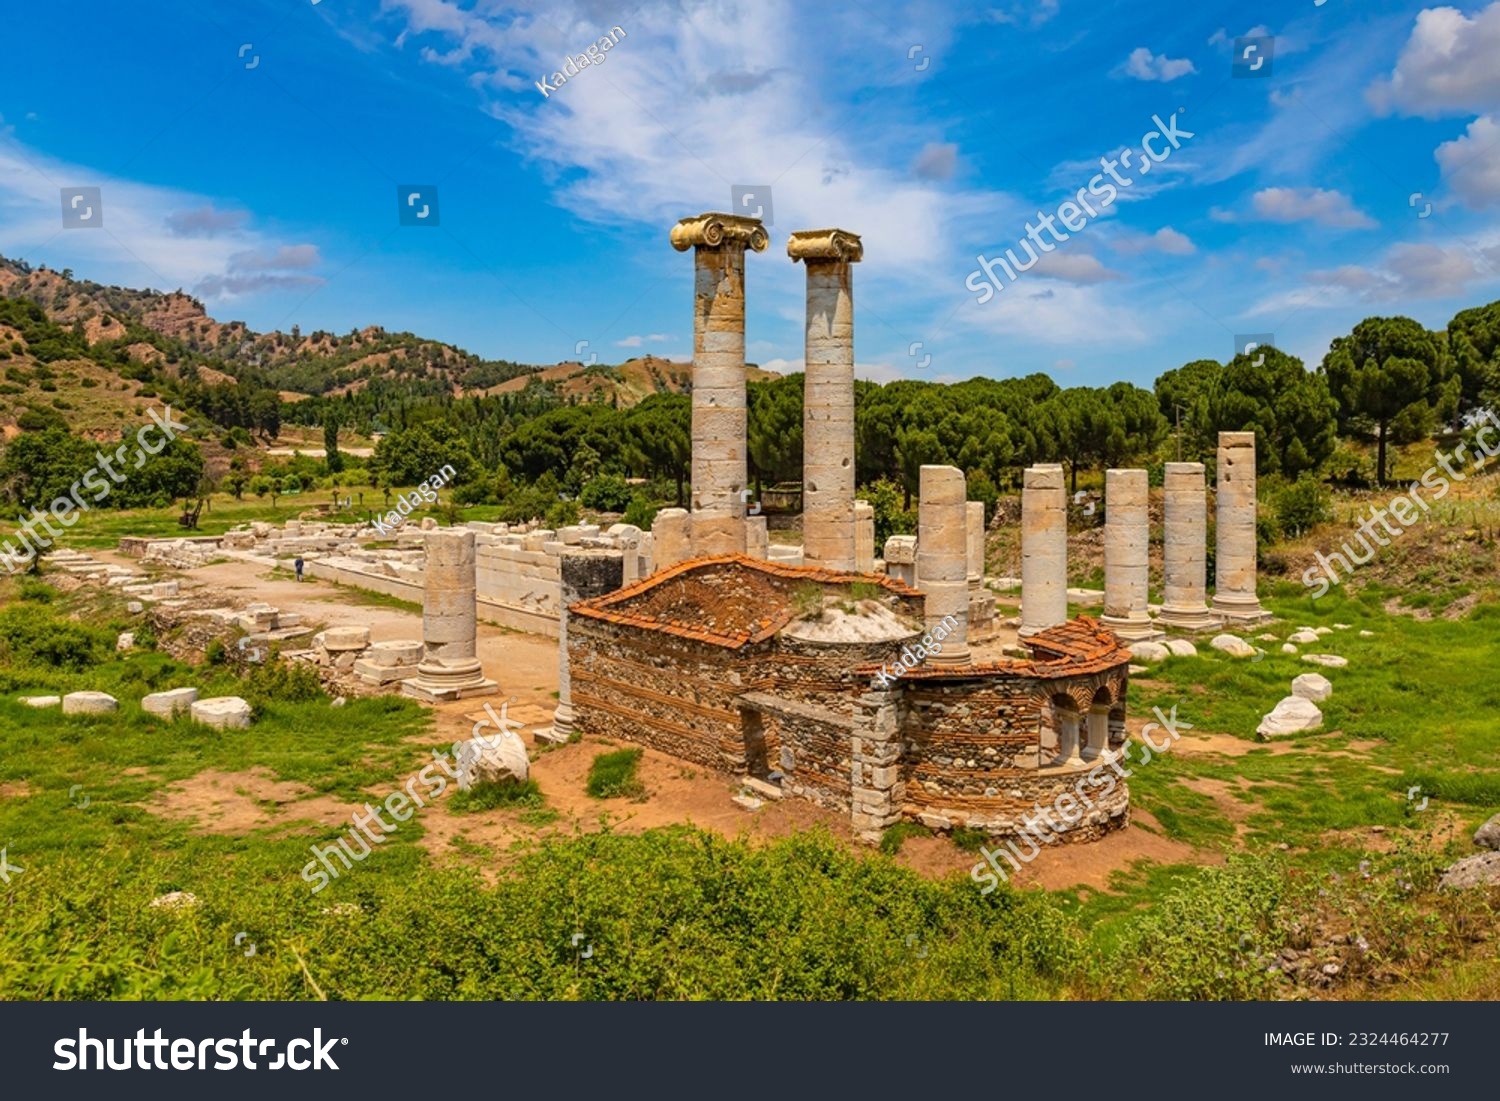 The Temple of Artemis, Sardes (Sardis) Ancient City - Manisa, Turkey #2324464277